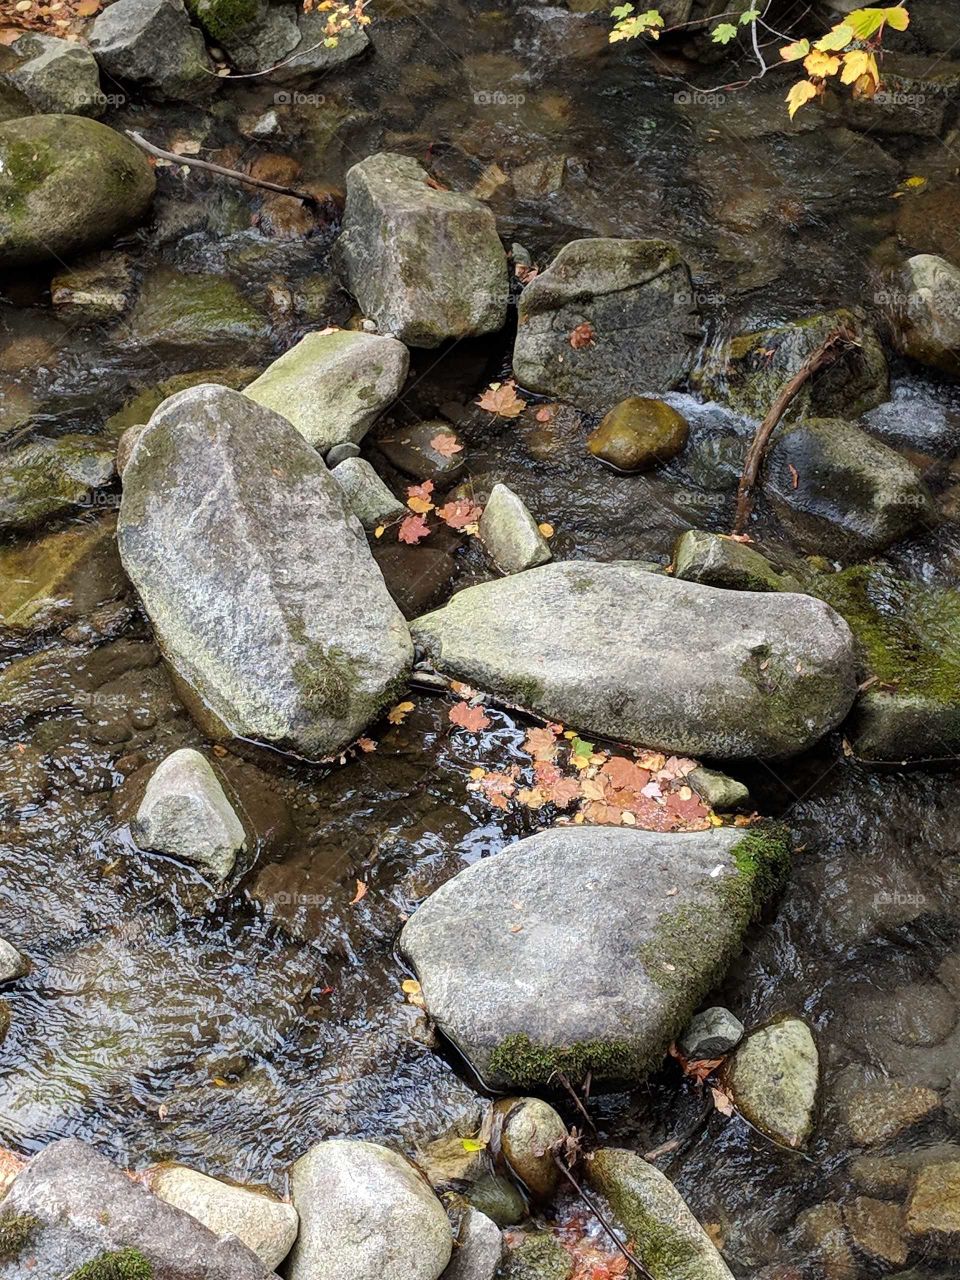 leaves of fall between rocks in a stream